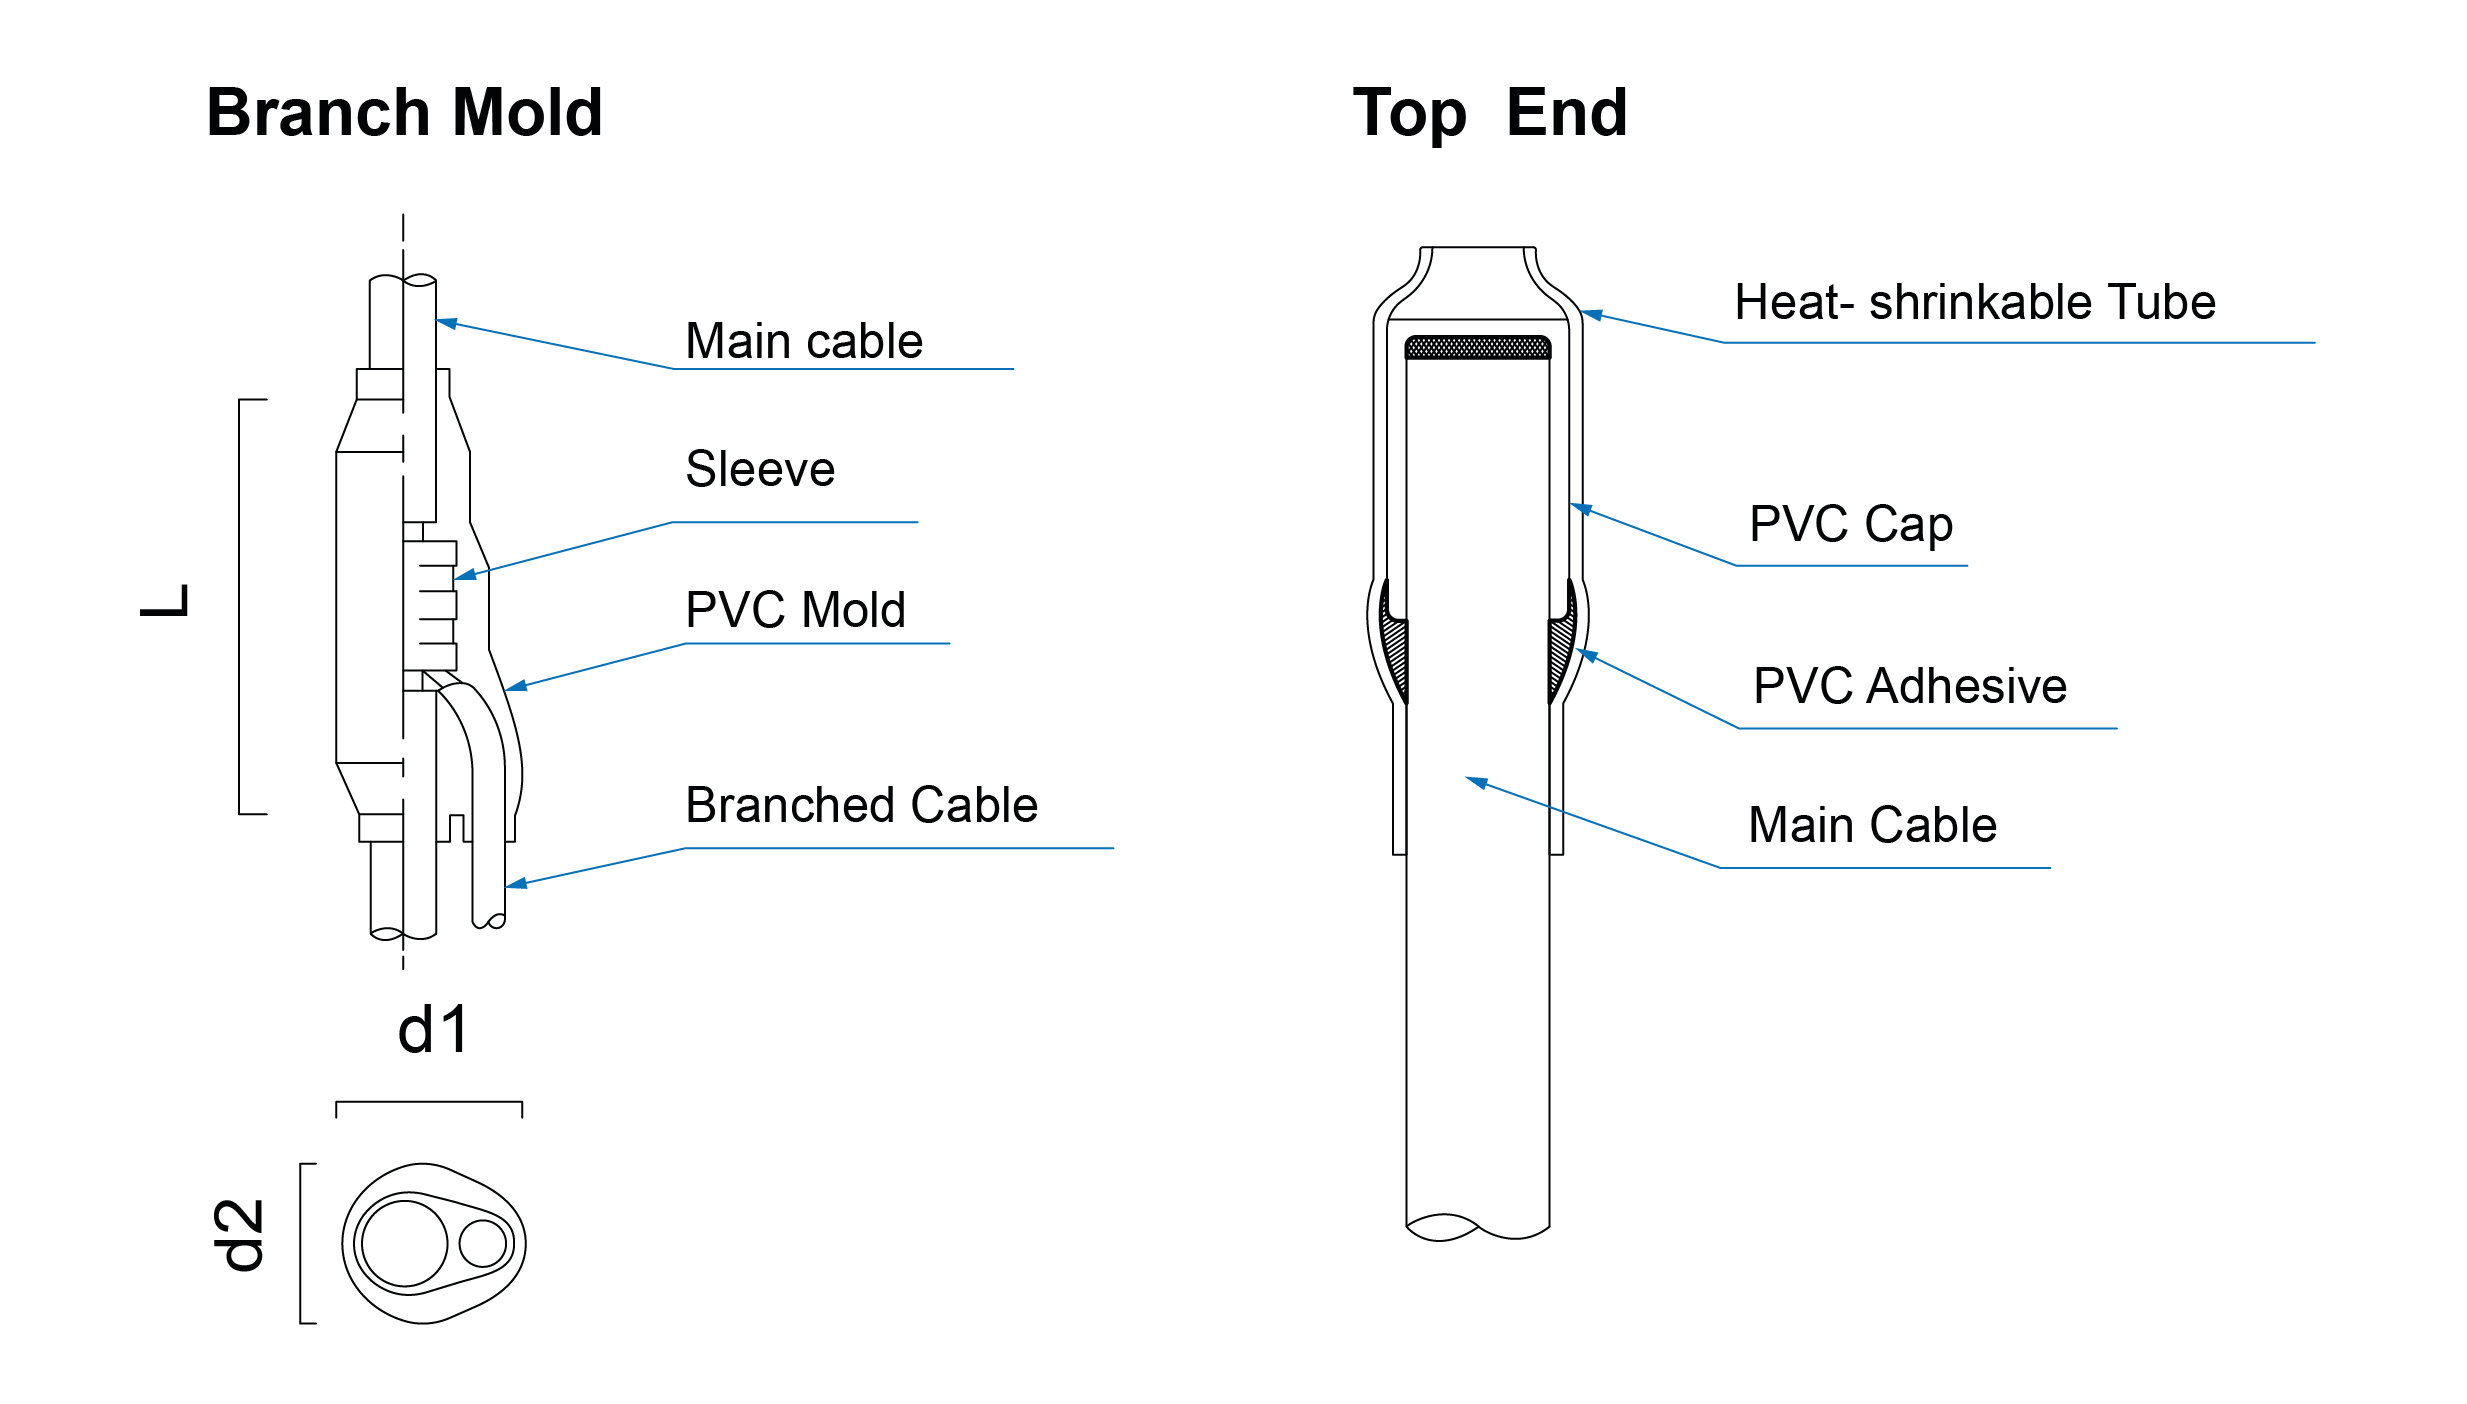 Single/Multi-Core Modular Cable Systems